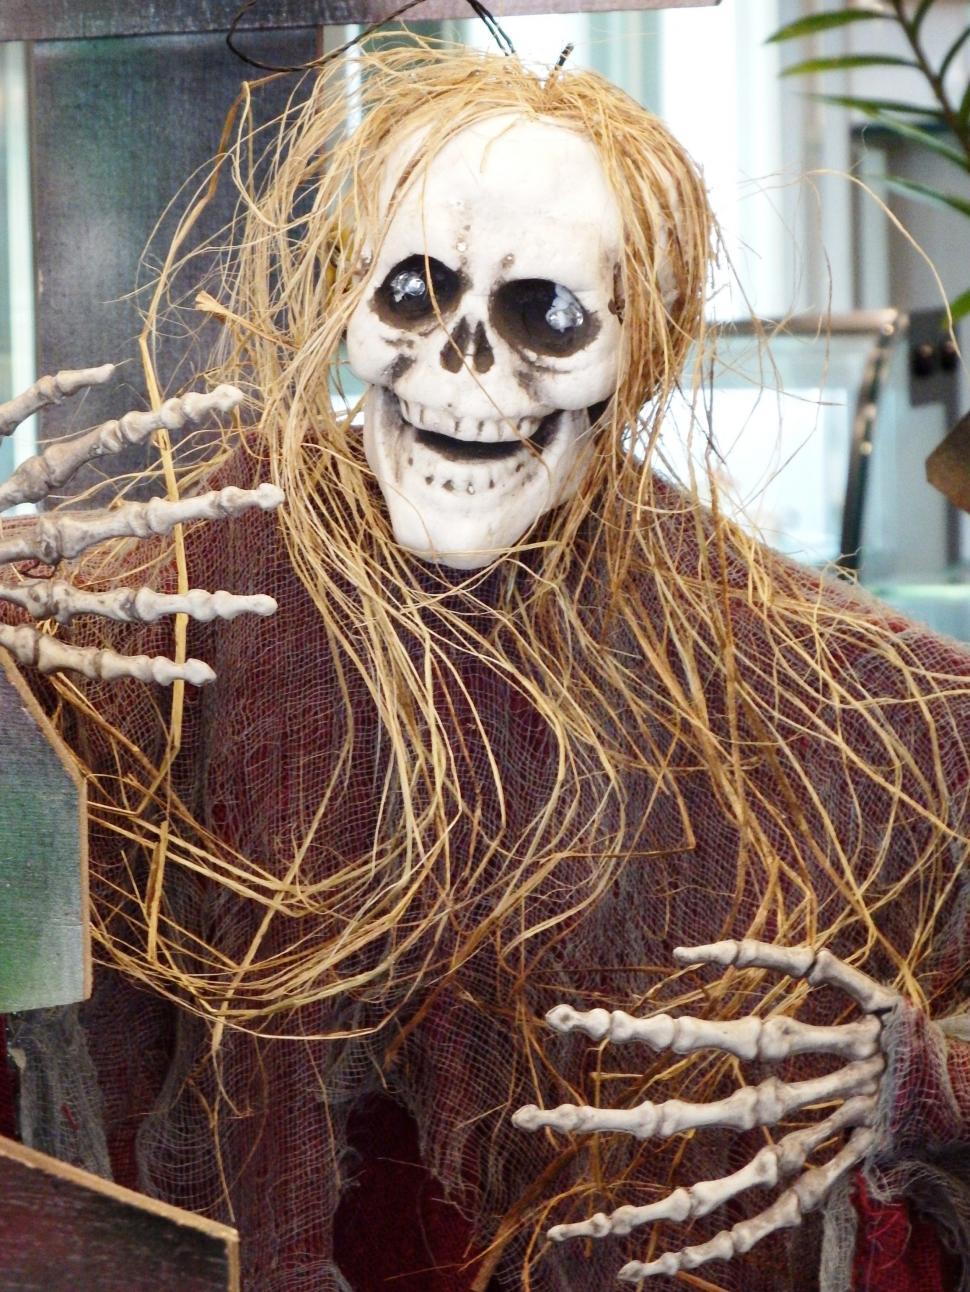 Free Image of Halloween Skeleton  